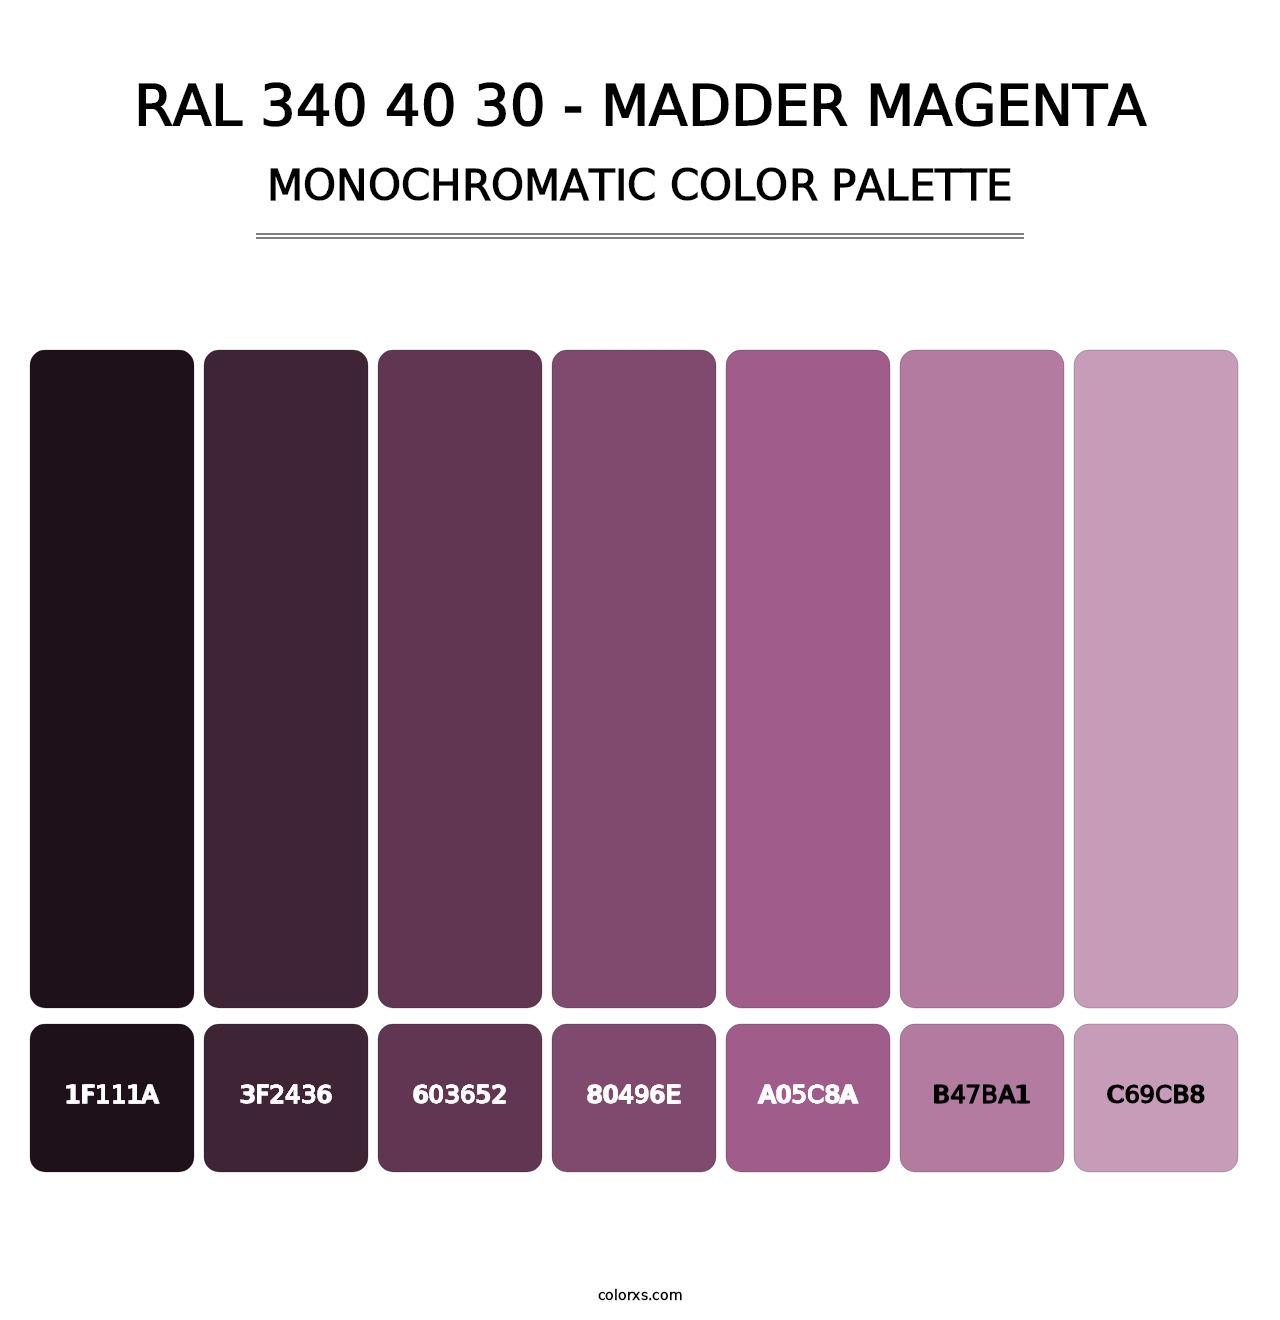 RAL 340 40 30 - Madder Magenta - Monochromatic Color Palette